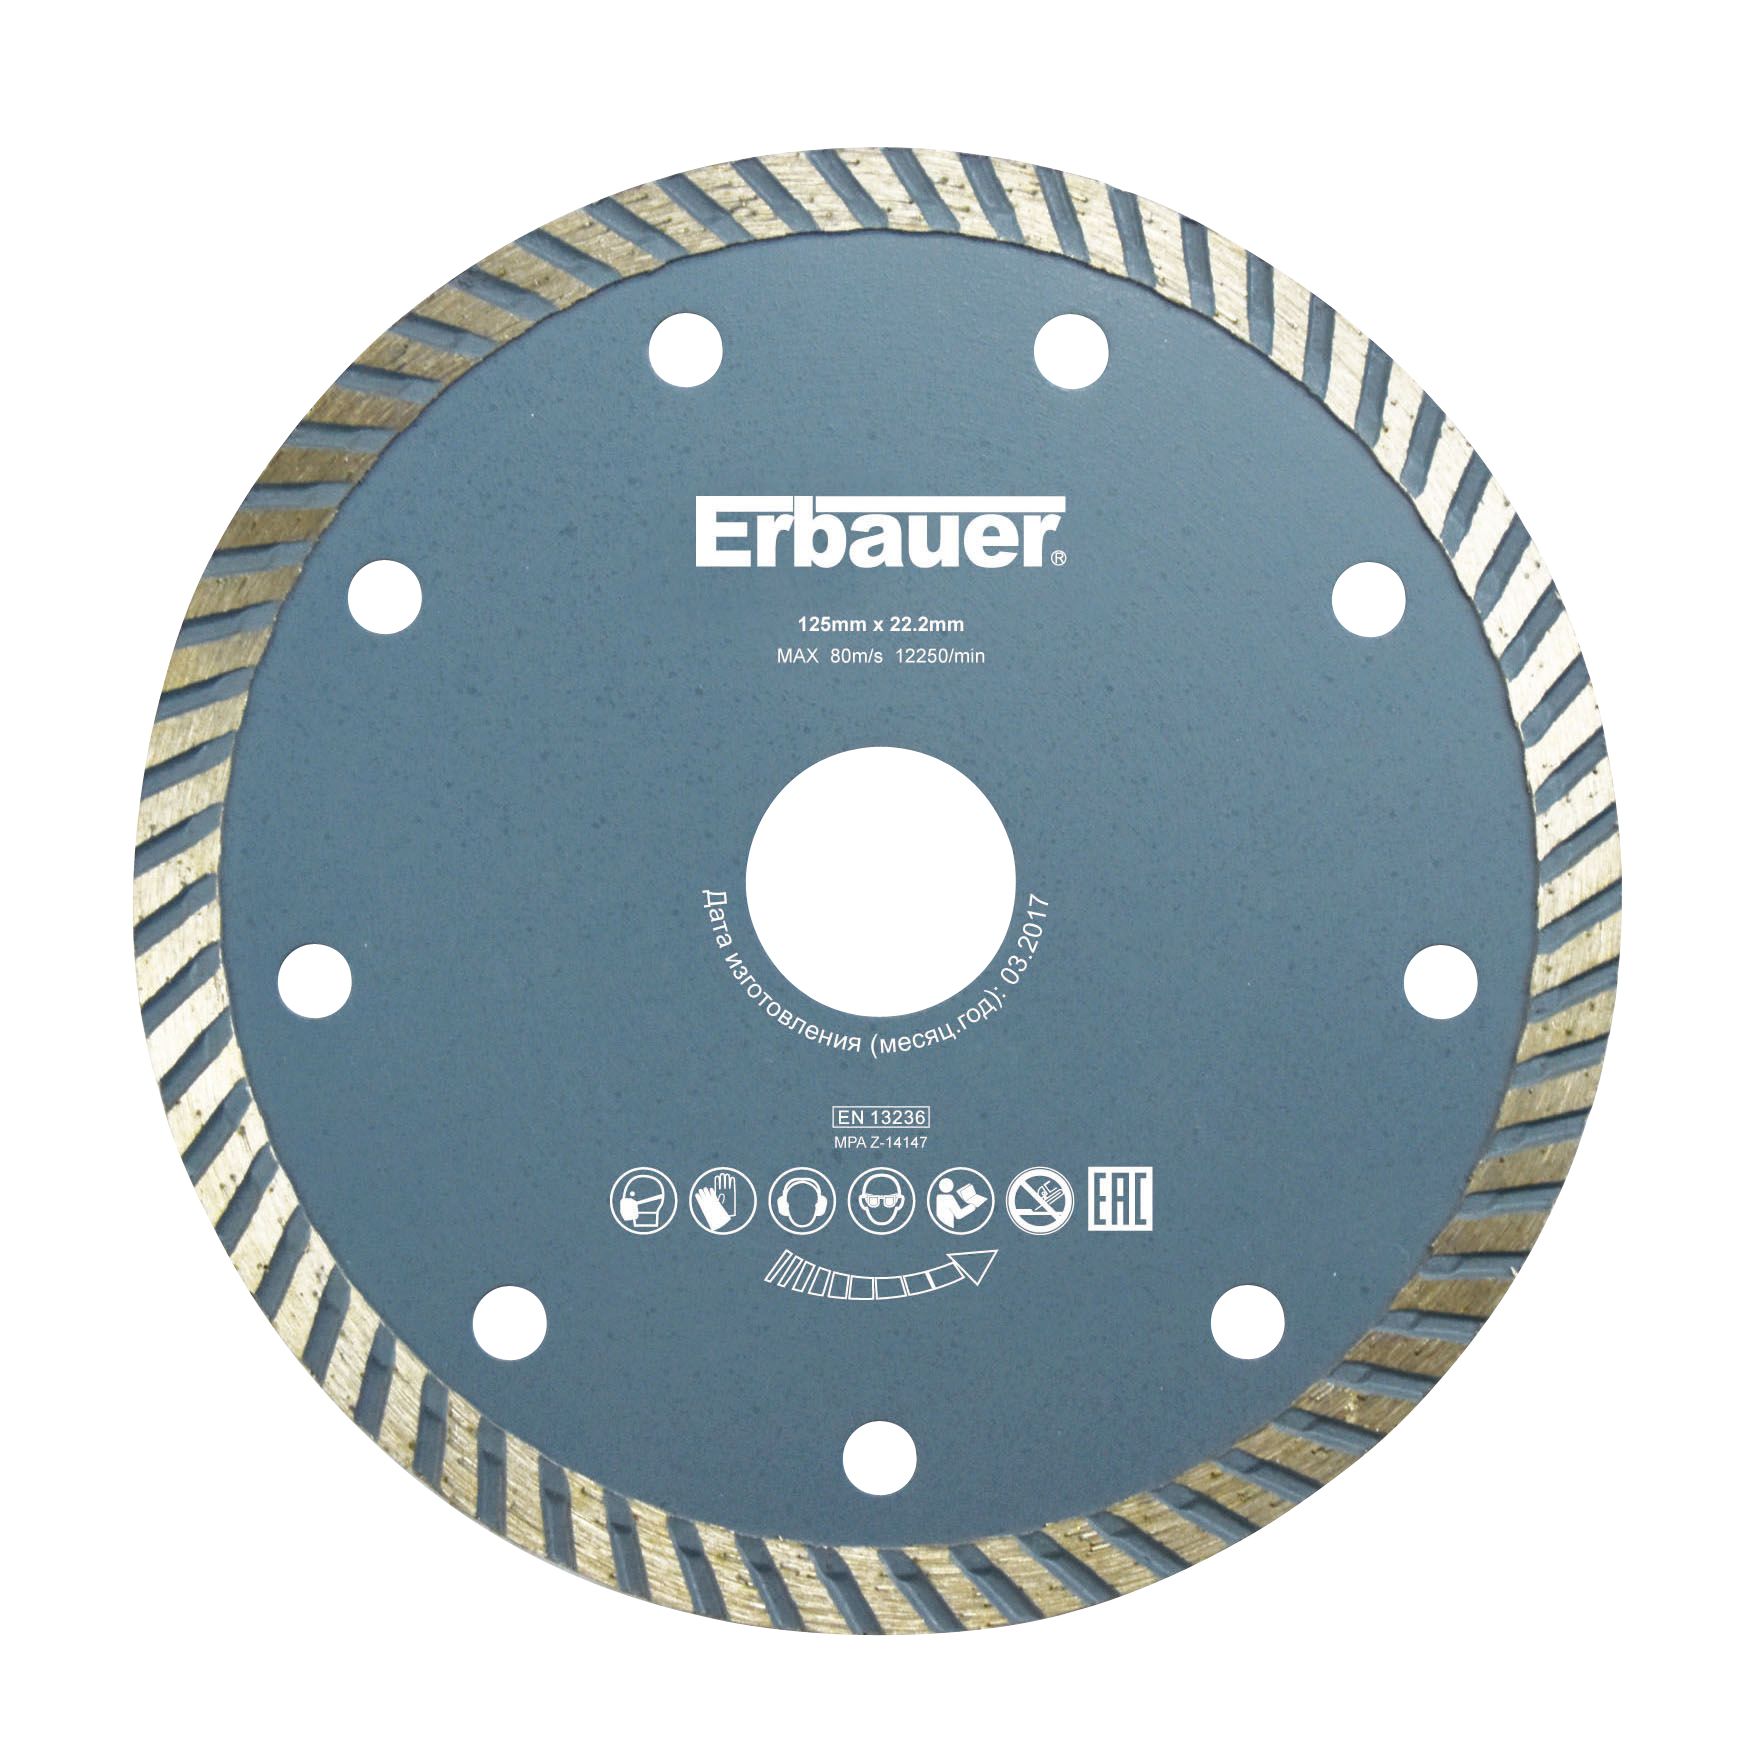 Erbauer 125mm x 22.2mm Diamond blade